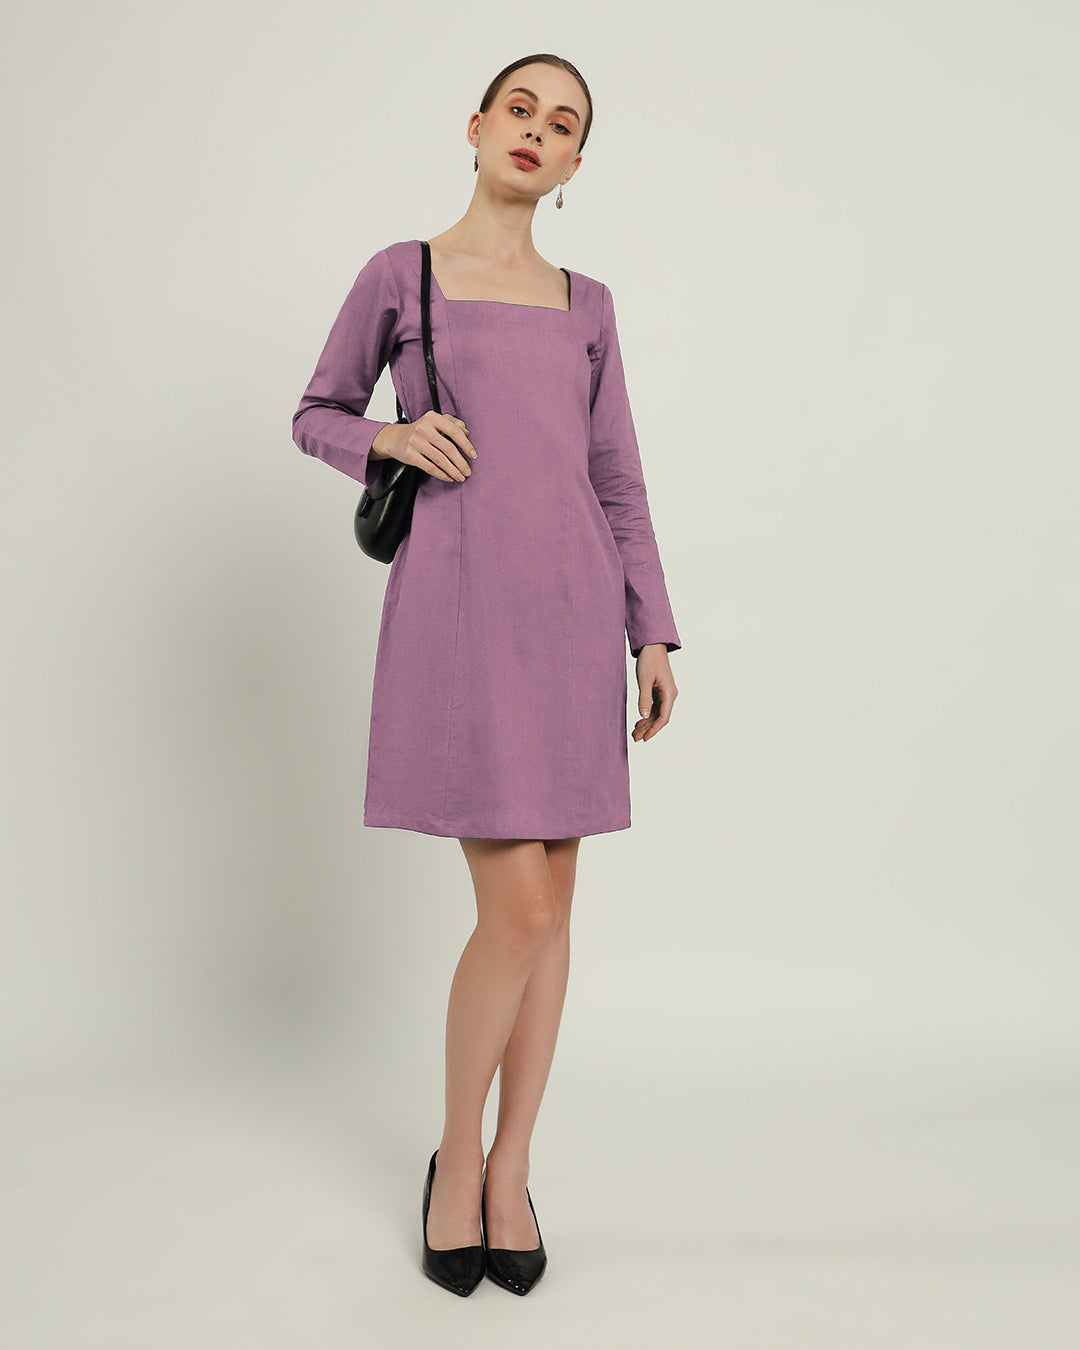 The Aurora Purple Swirl Dress